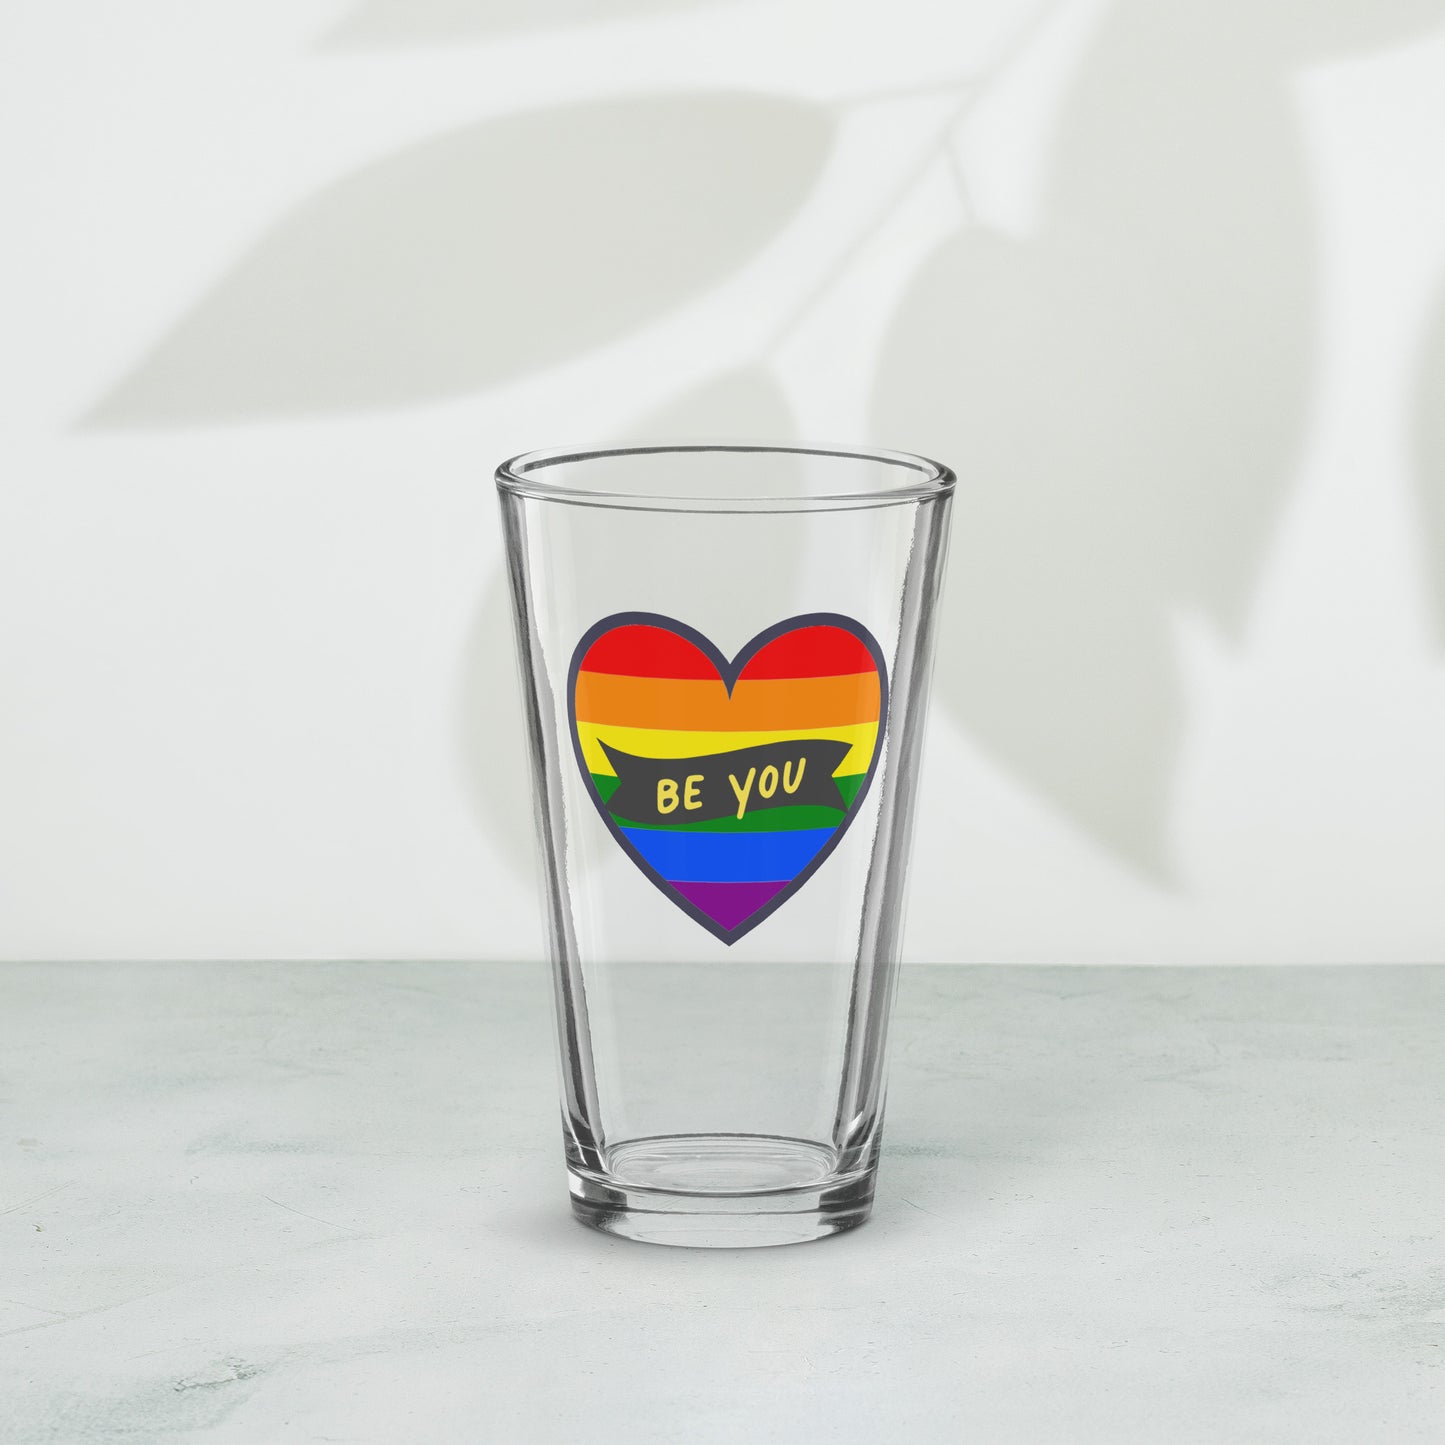 Shaker Pint Glass: Be You (rainbow heart)